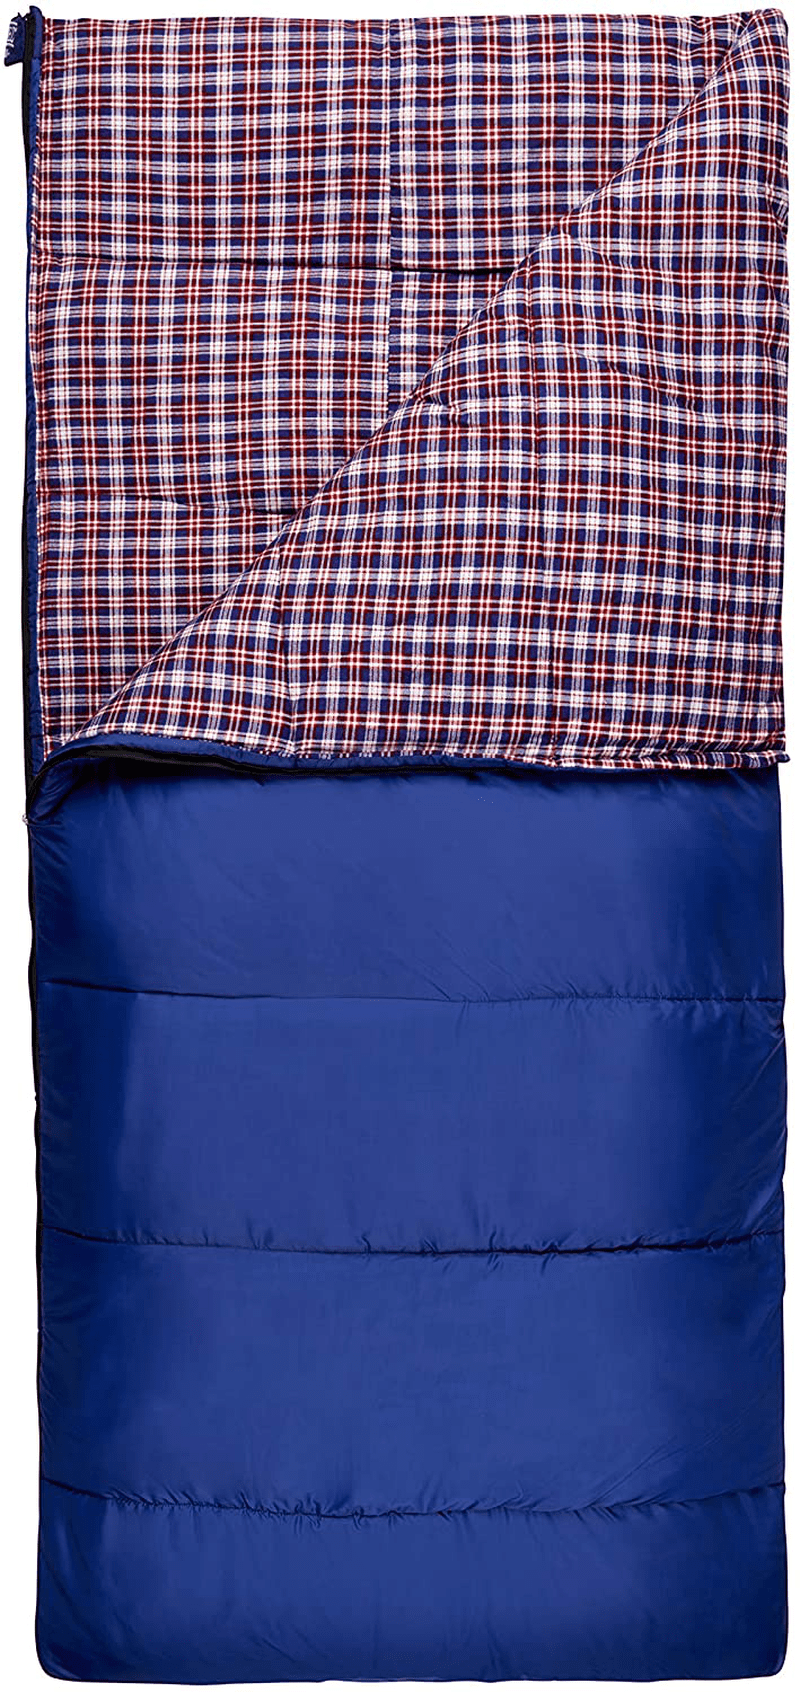 Wenzel Sleeping-Bags Wenzel Blue Jay 25 Degree Sleeping Bag Sporting Goods > Outdoor Recreation > Camping & Hiking > Sleeping Bags Wenzel   